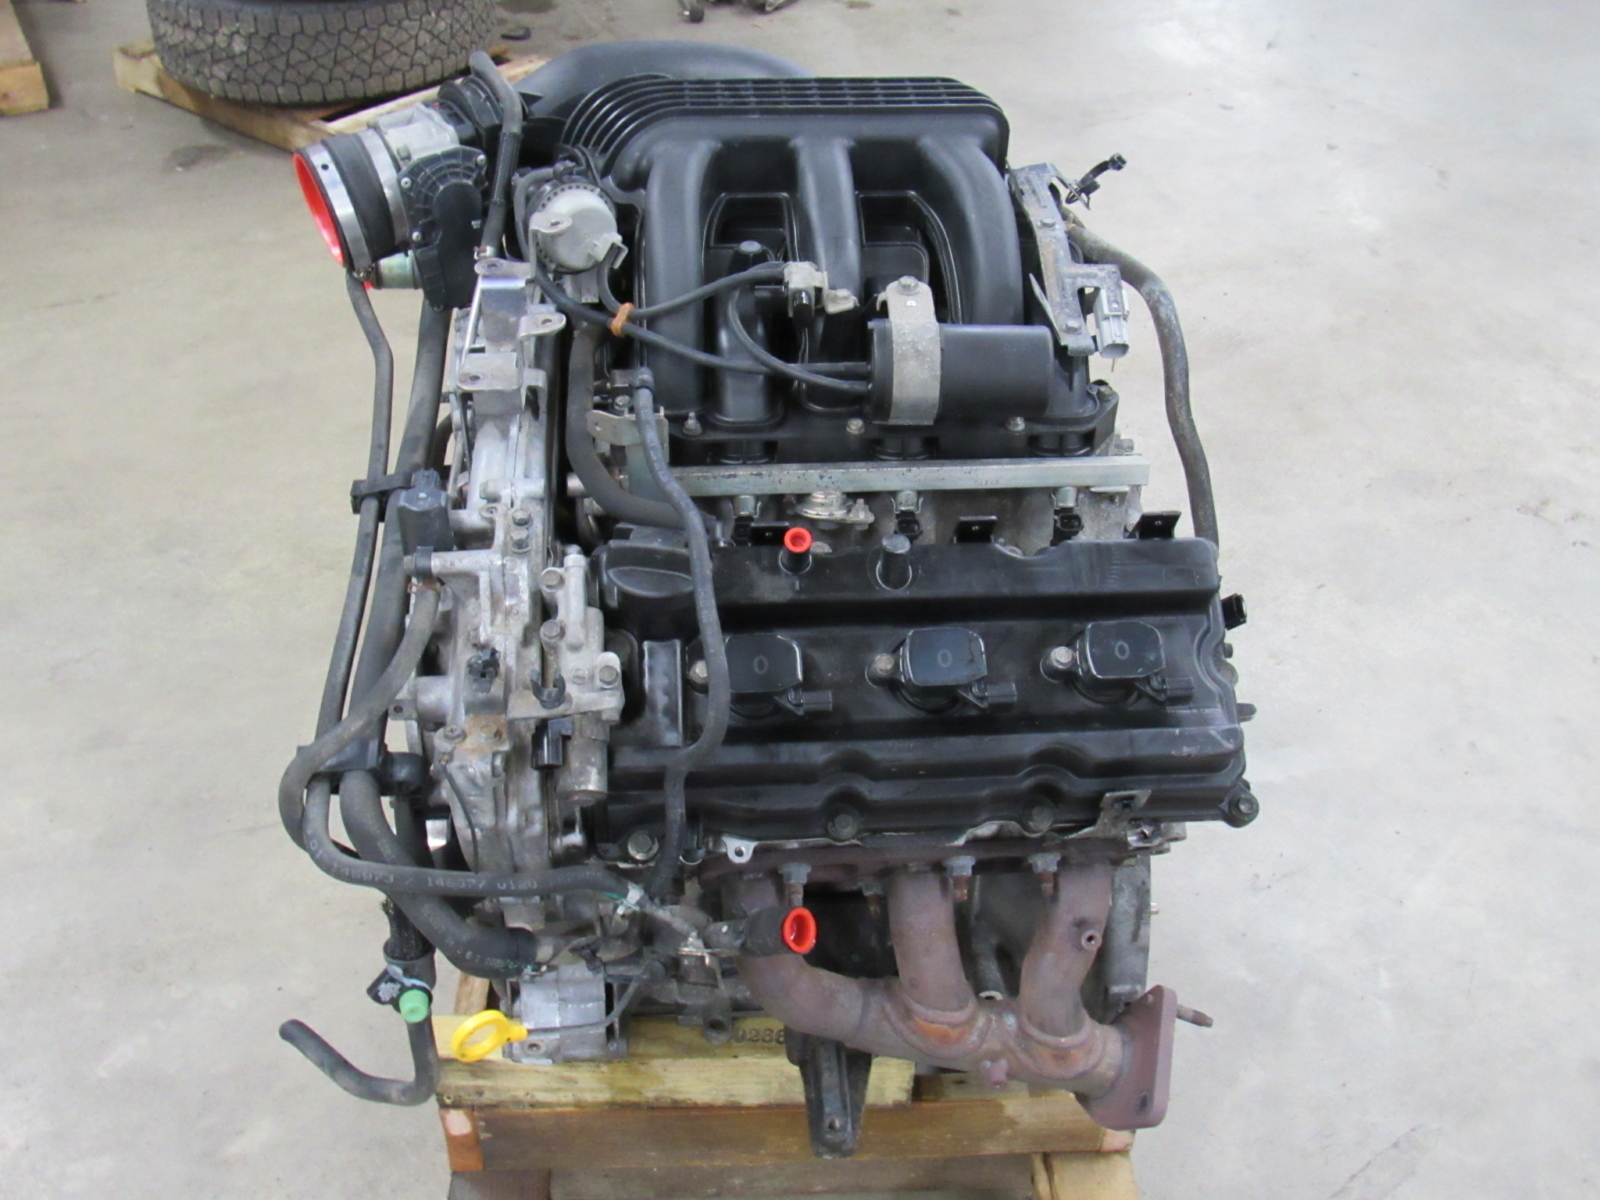 09-12 Nissan Frontier Xterra Pathfinder 4.0L V6 VQ40DE Motor Engine VIN 